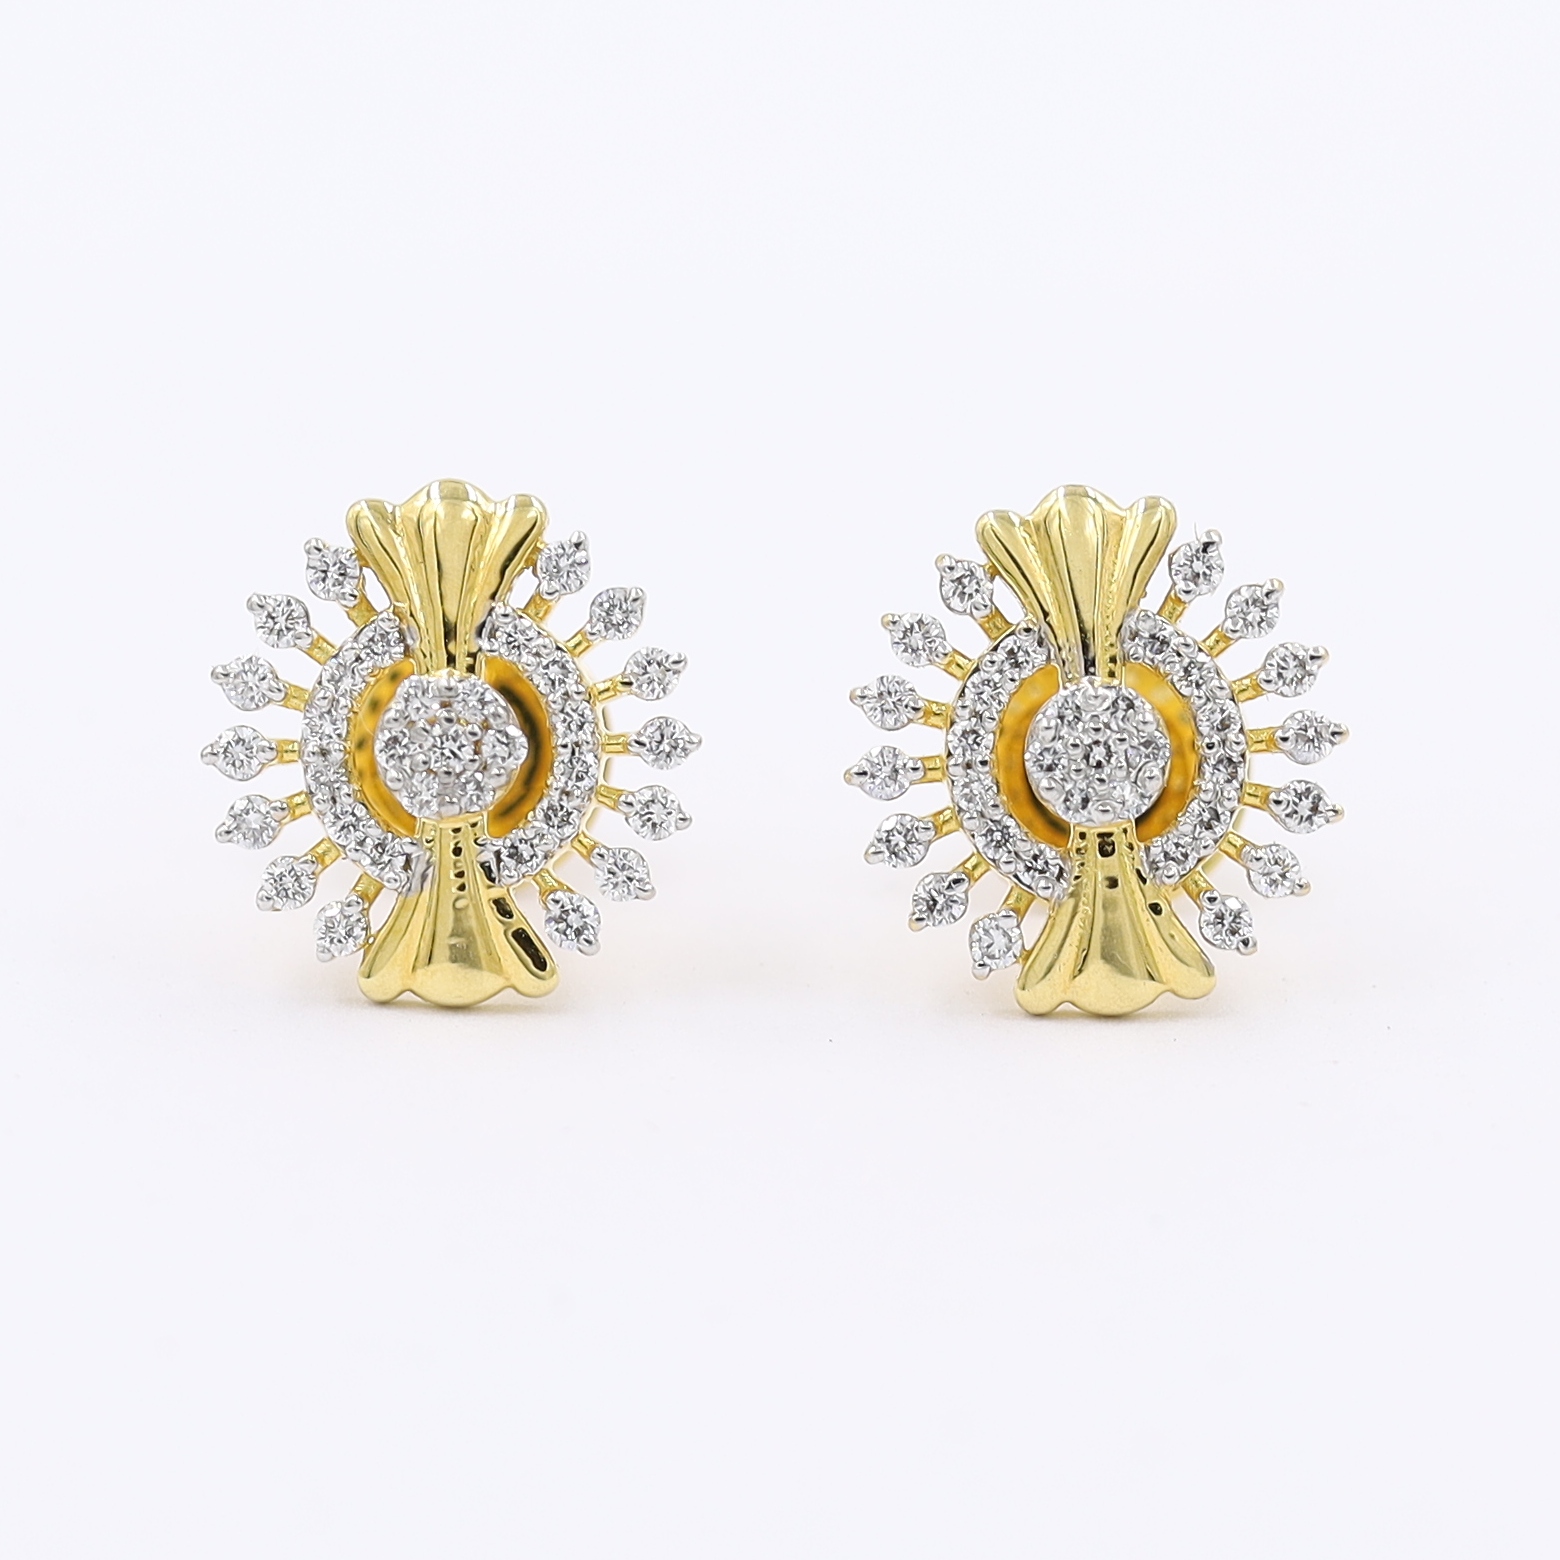 Cluster Look Traditional 18kt Diamond Stud Earrings